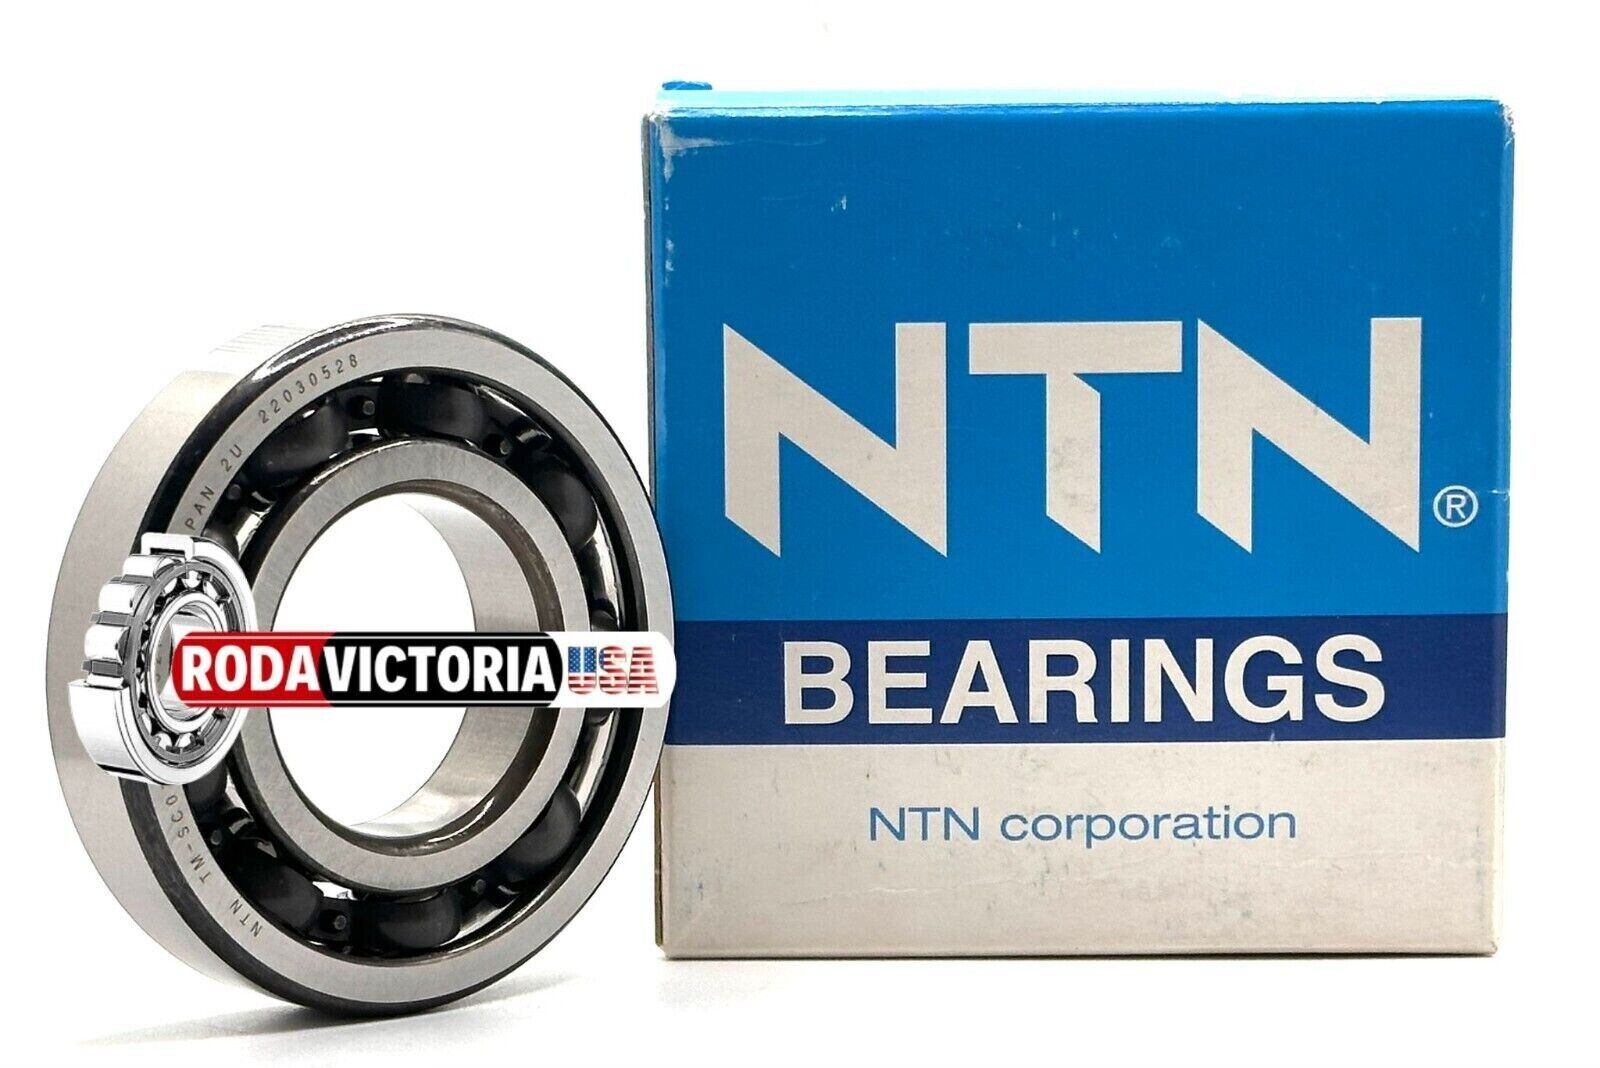 Ball Bearings - NES Bearing Co., Inc.